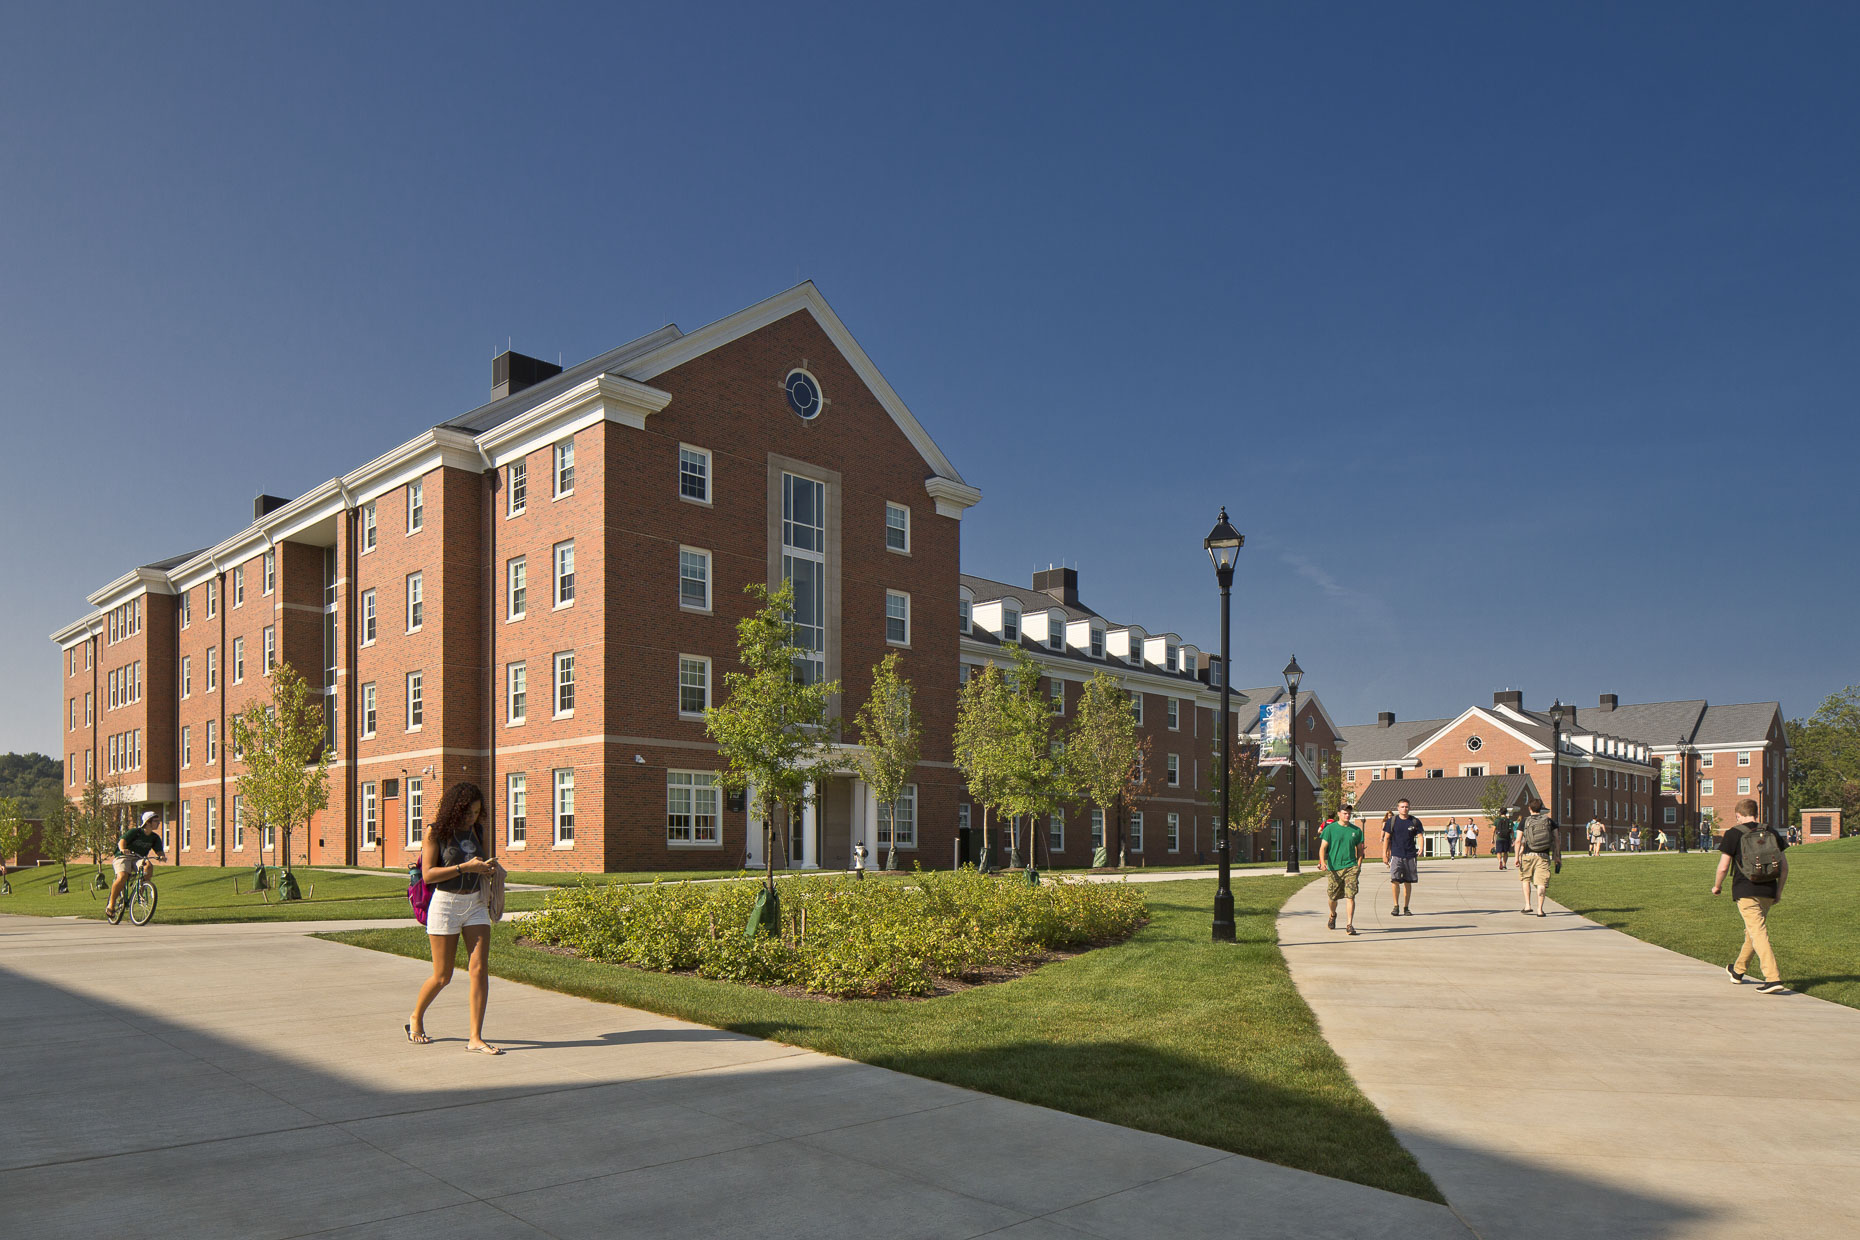 Ohio University Student Housing by Corna-Kokosing photographed by BRad Feinknopf based in Columbus, Ohio